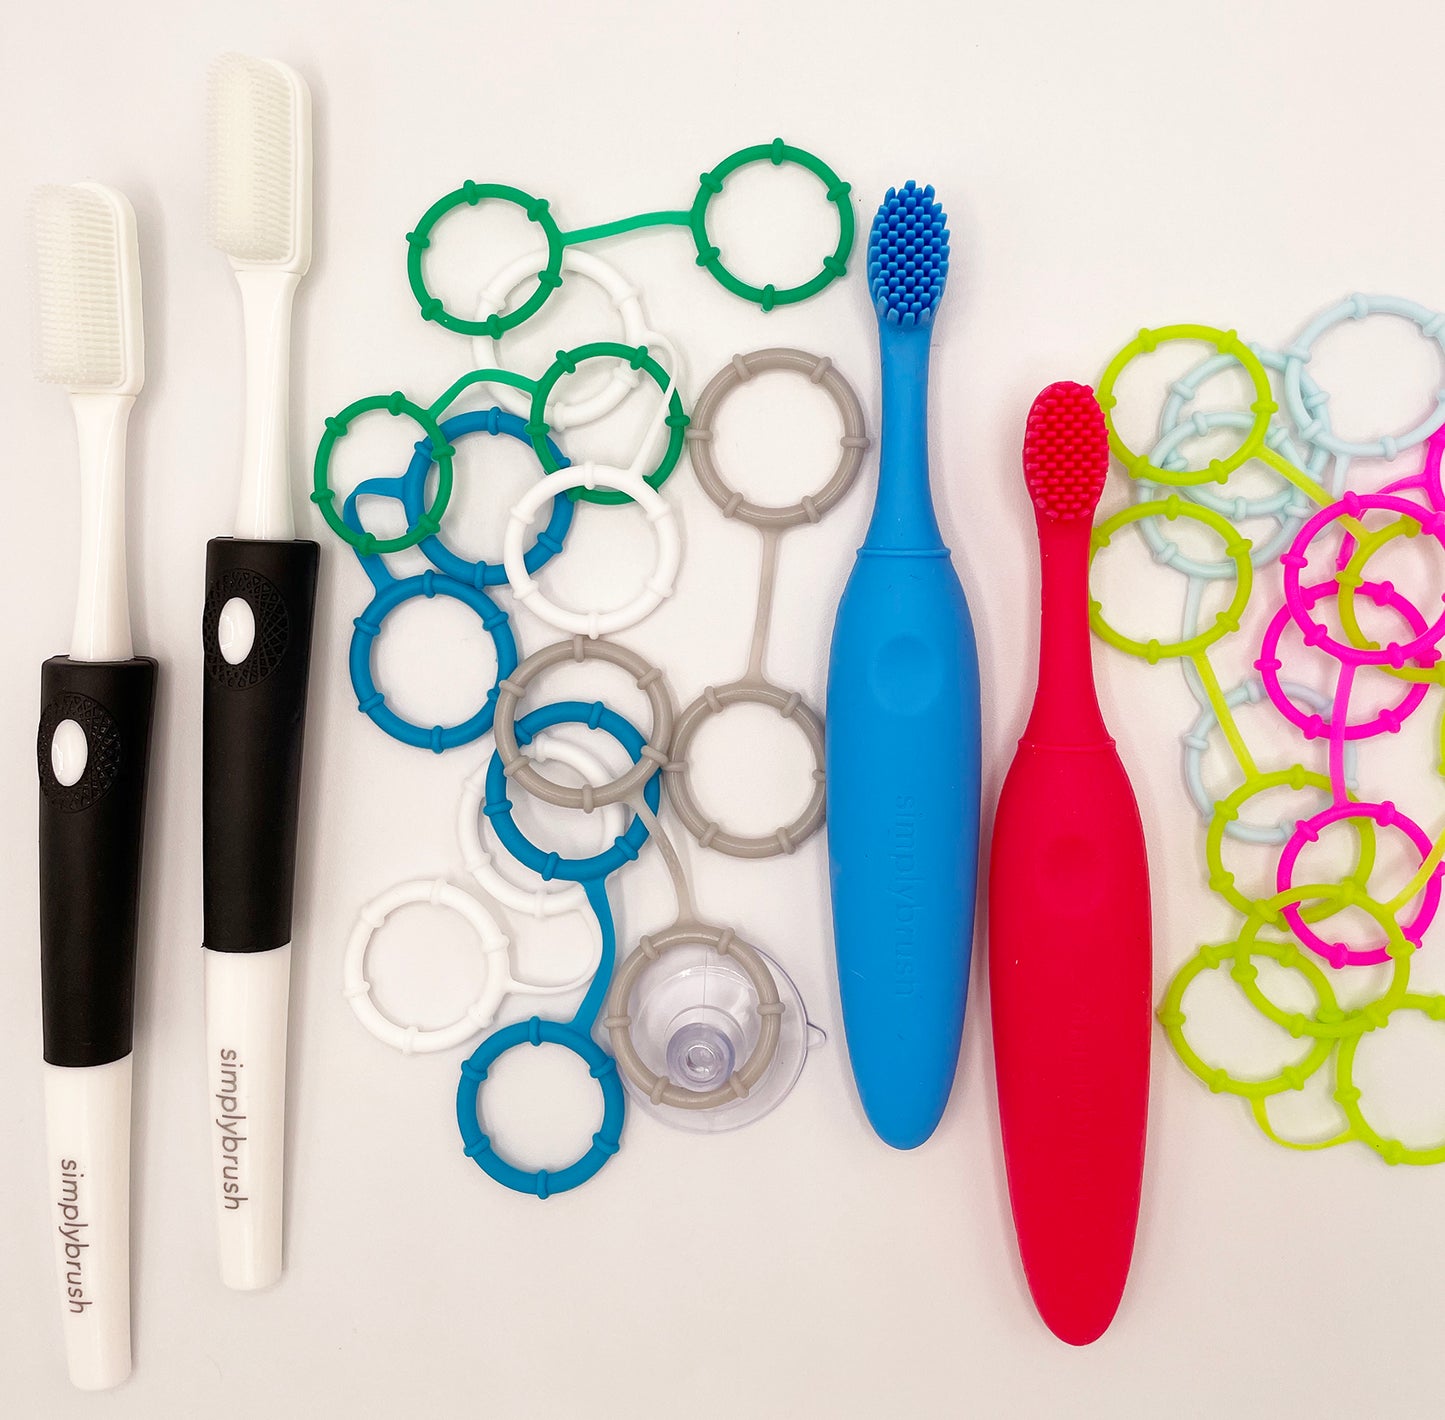 SimplyBrush Kids: Gentle Silicone Toothbrush for Teething Babies